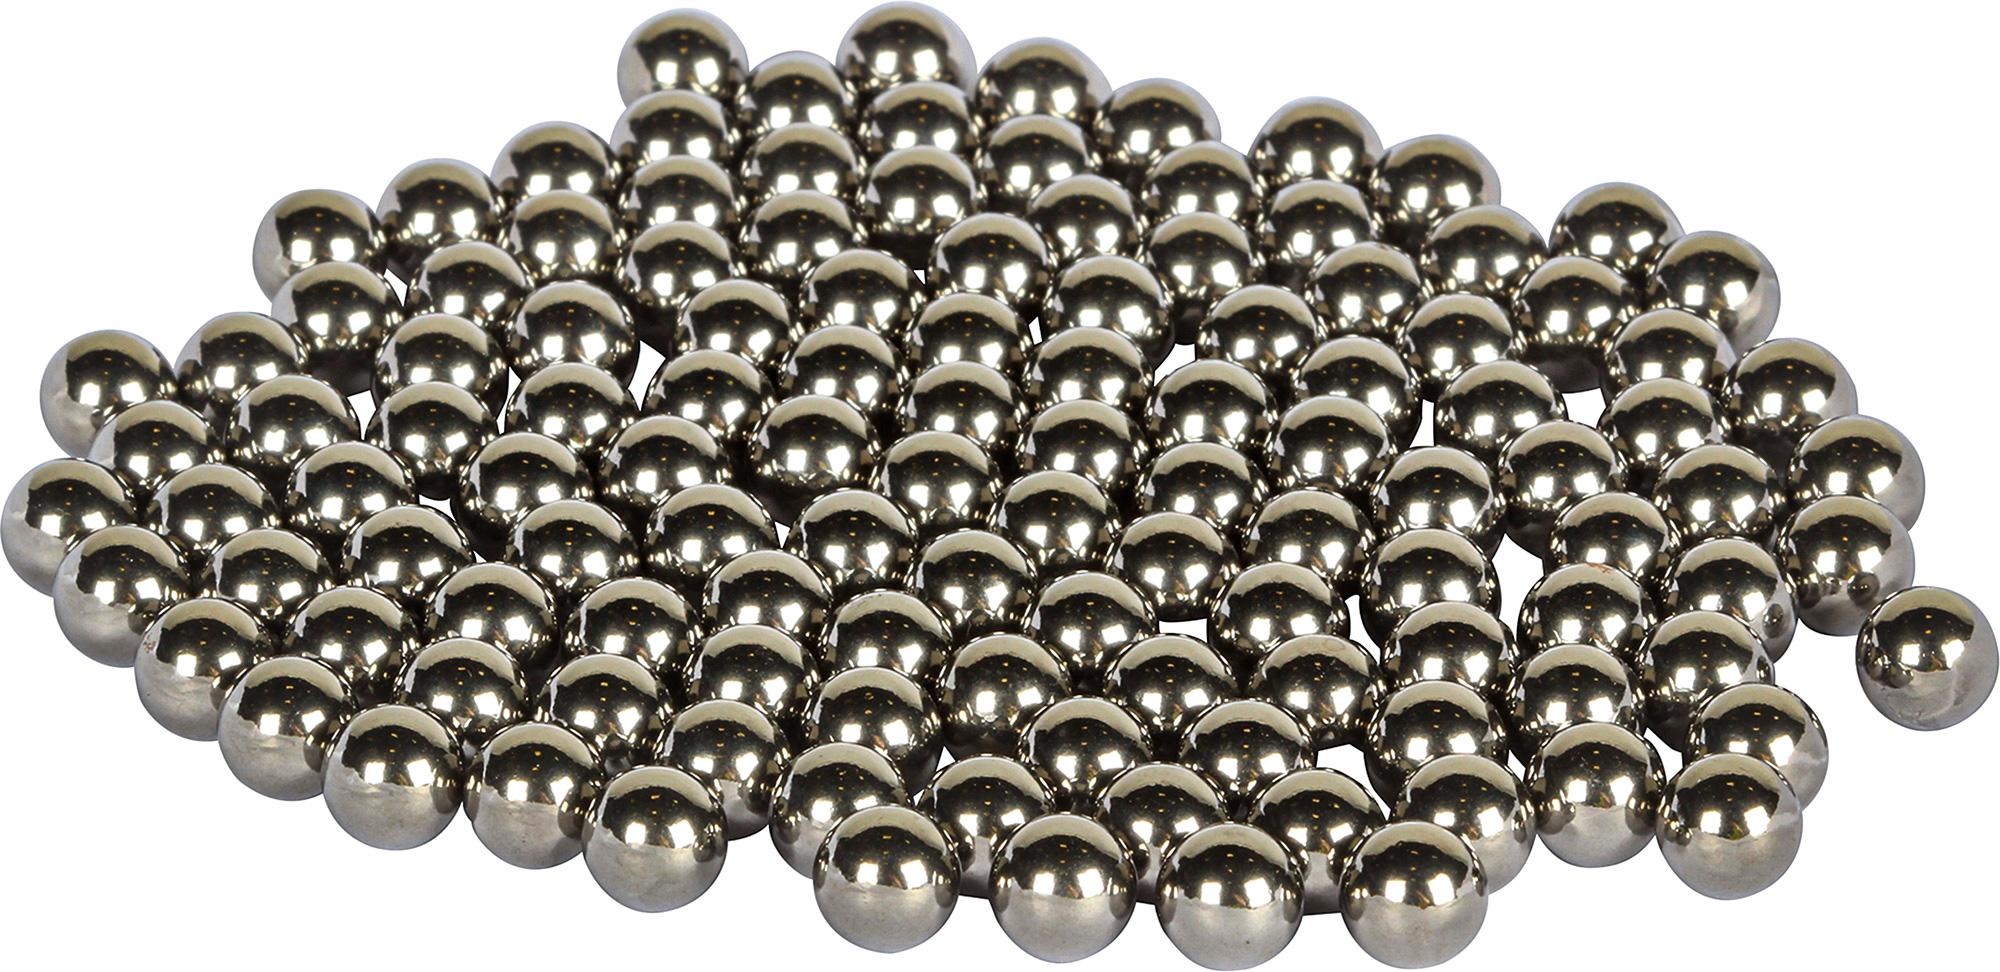 11mm Catapult Slingshot Ammo 2000 Balls Carbon Steel Ball Bearings High Quality 